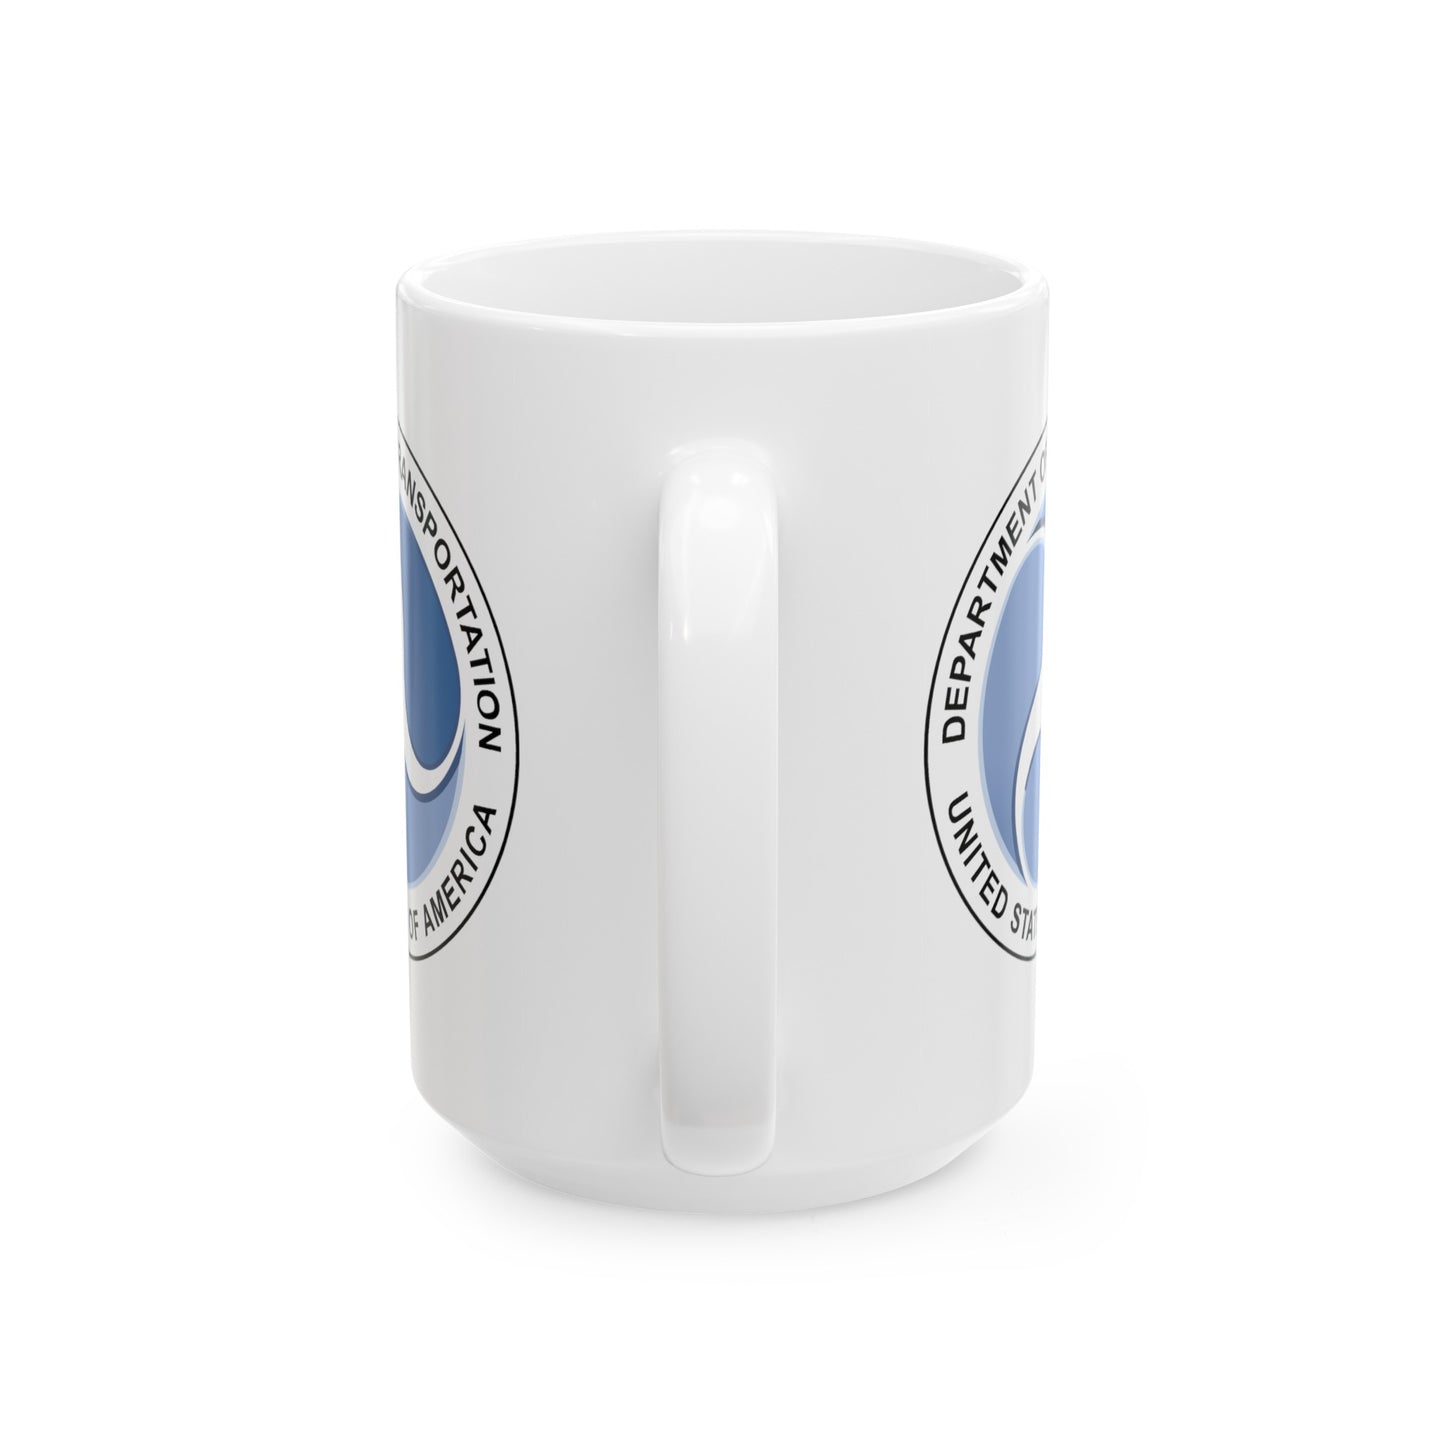 Department of Transportation Coffee Mug - Double Sided White Ceramic 15oz by TheGlassyLass.com